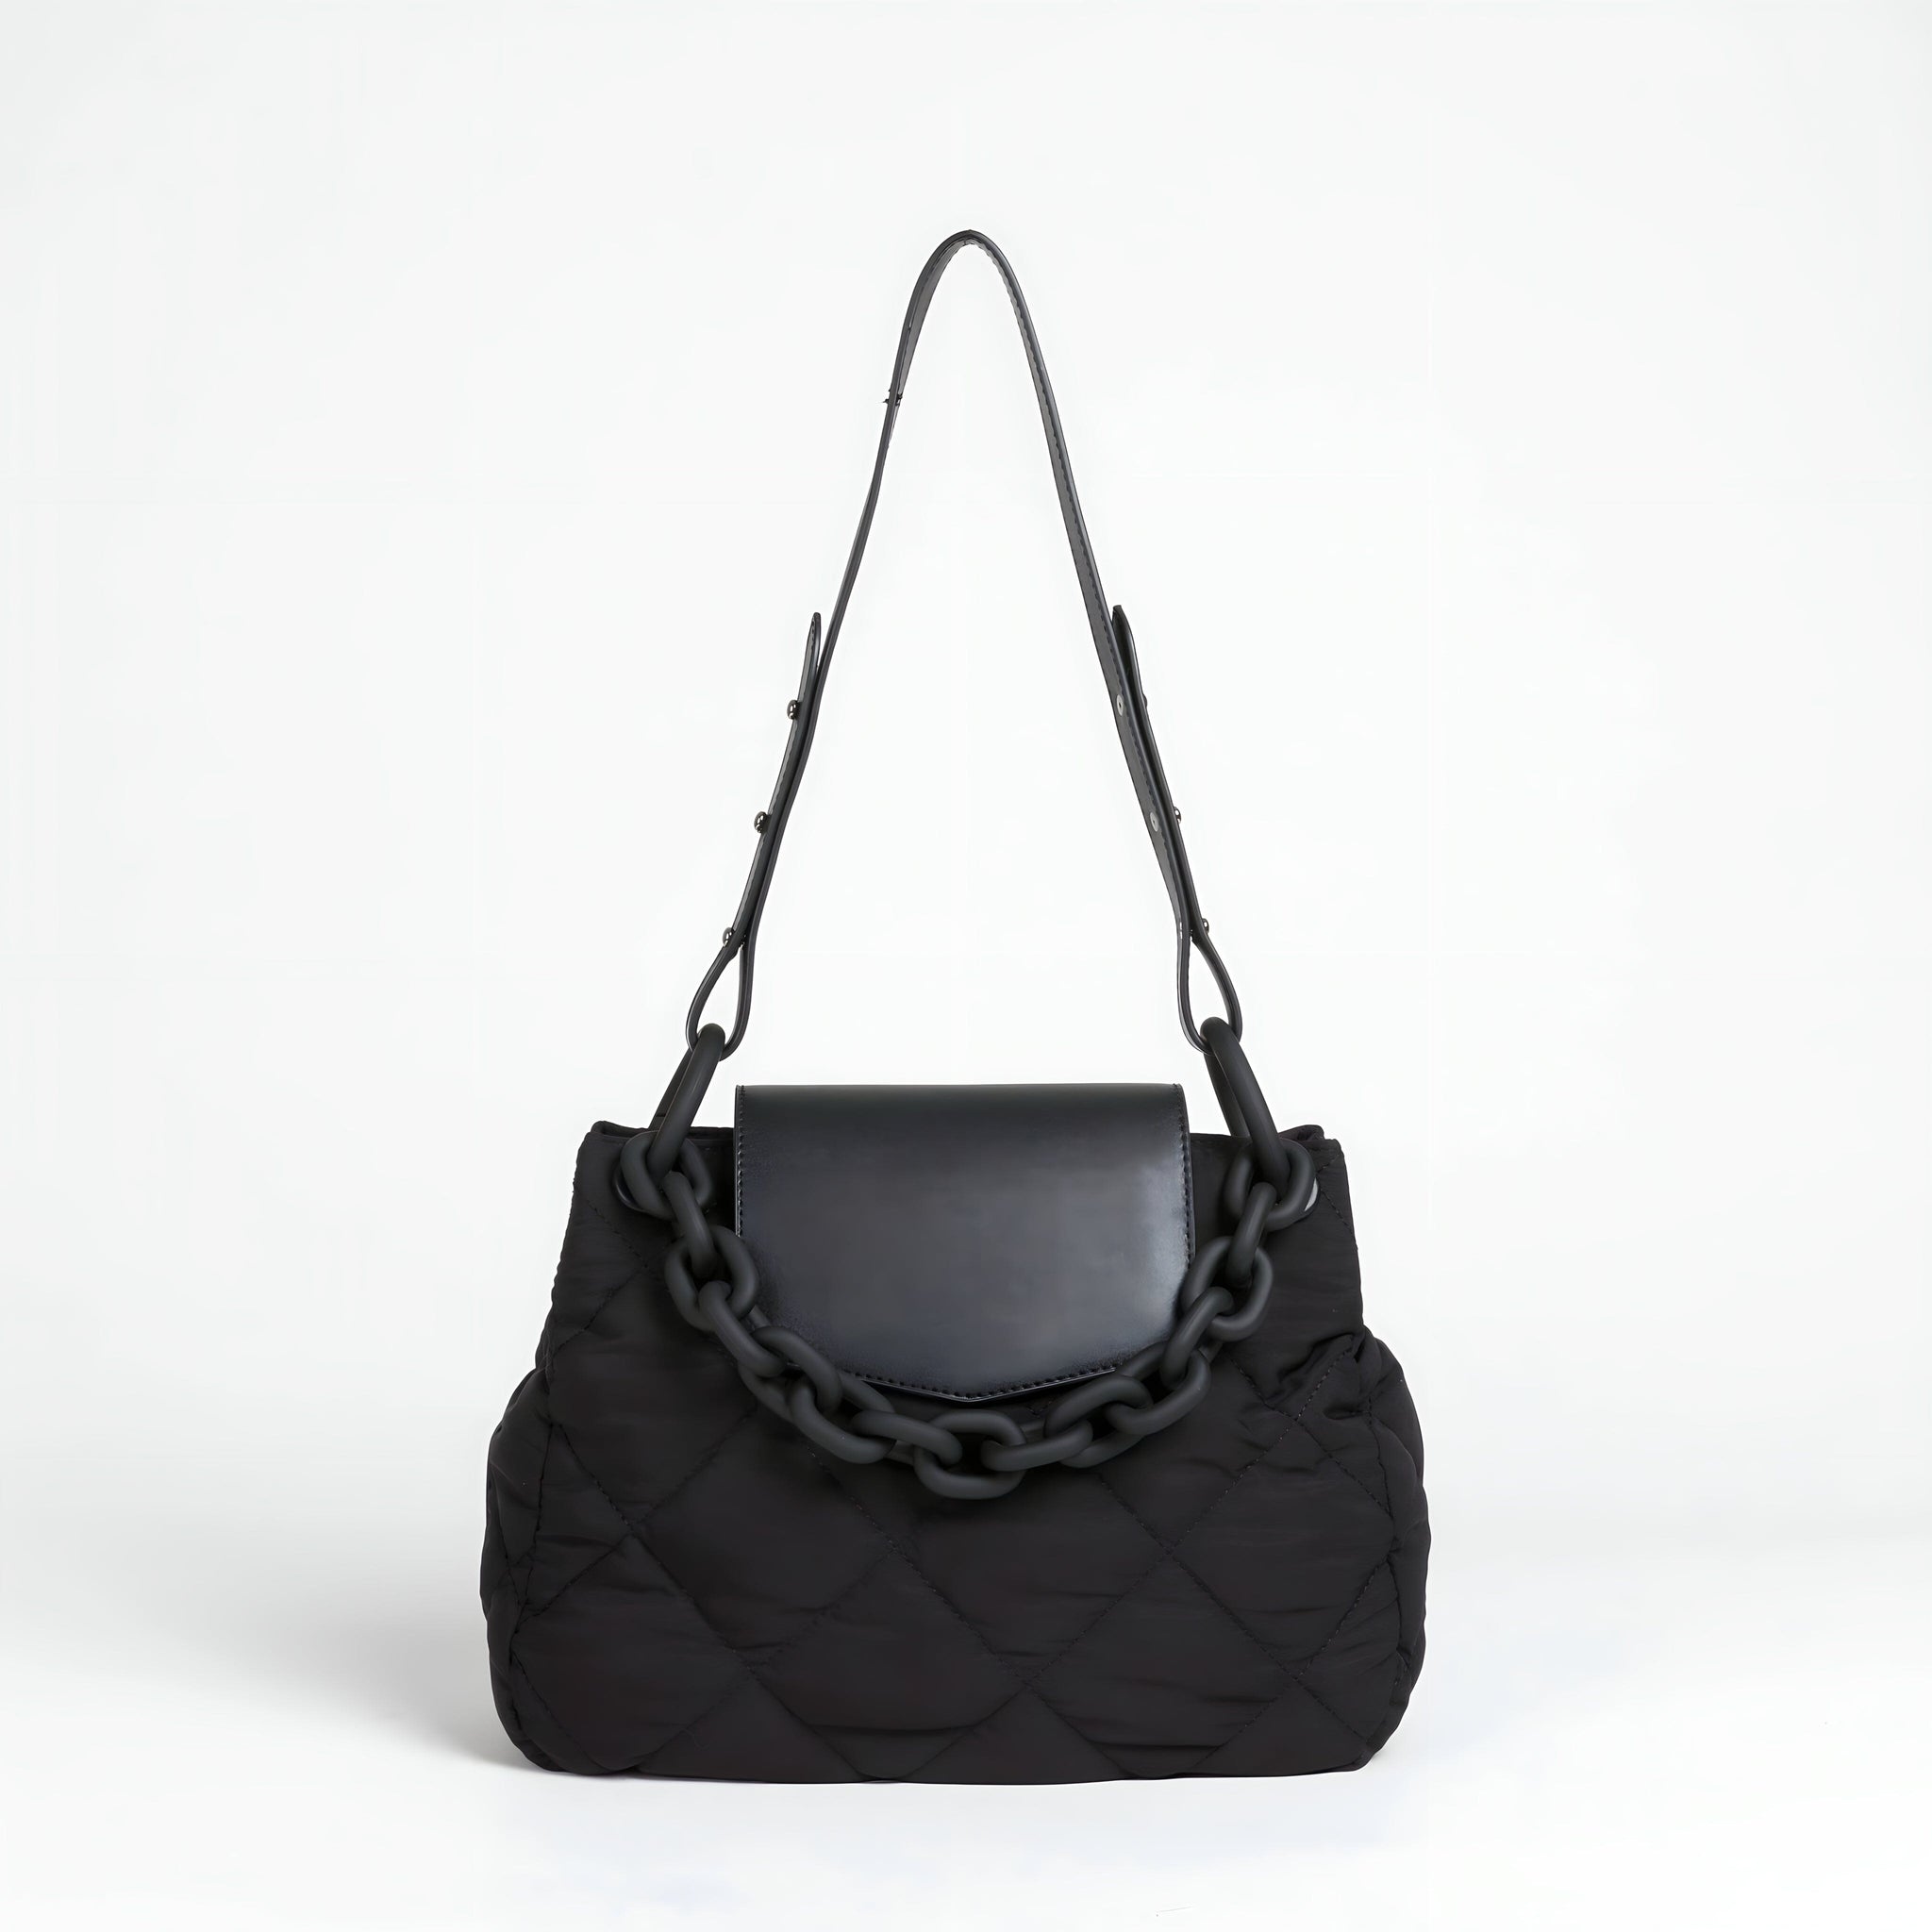 The Merritt Chainlink Quilted Handbag Purse - Multiple Colors 0 SA Styles Black 